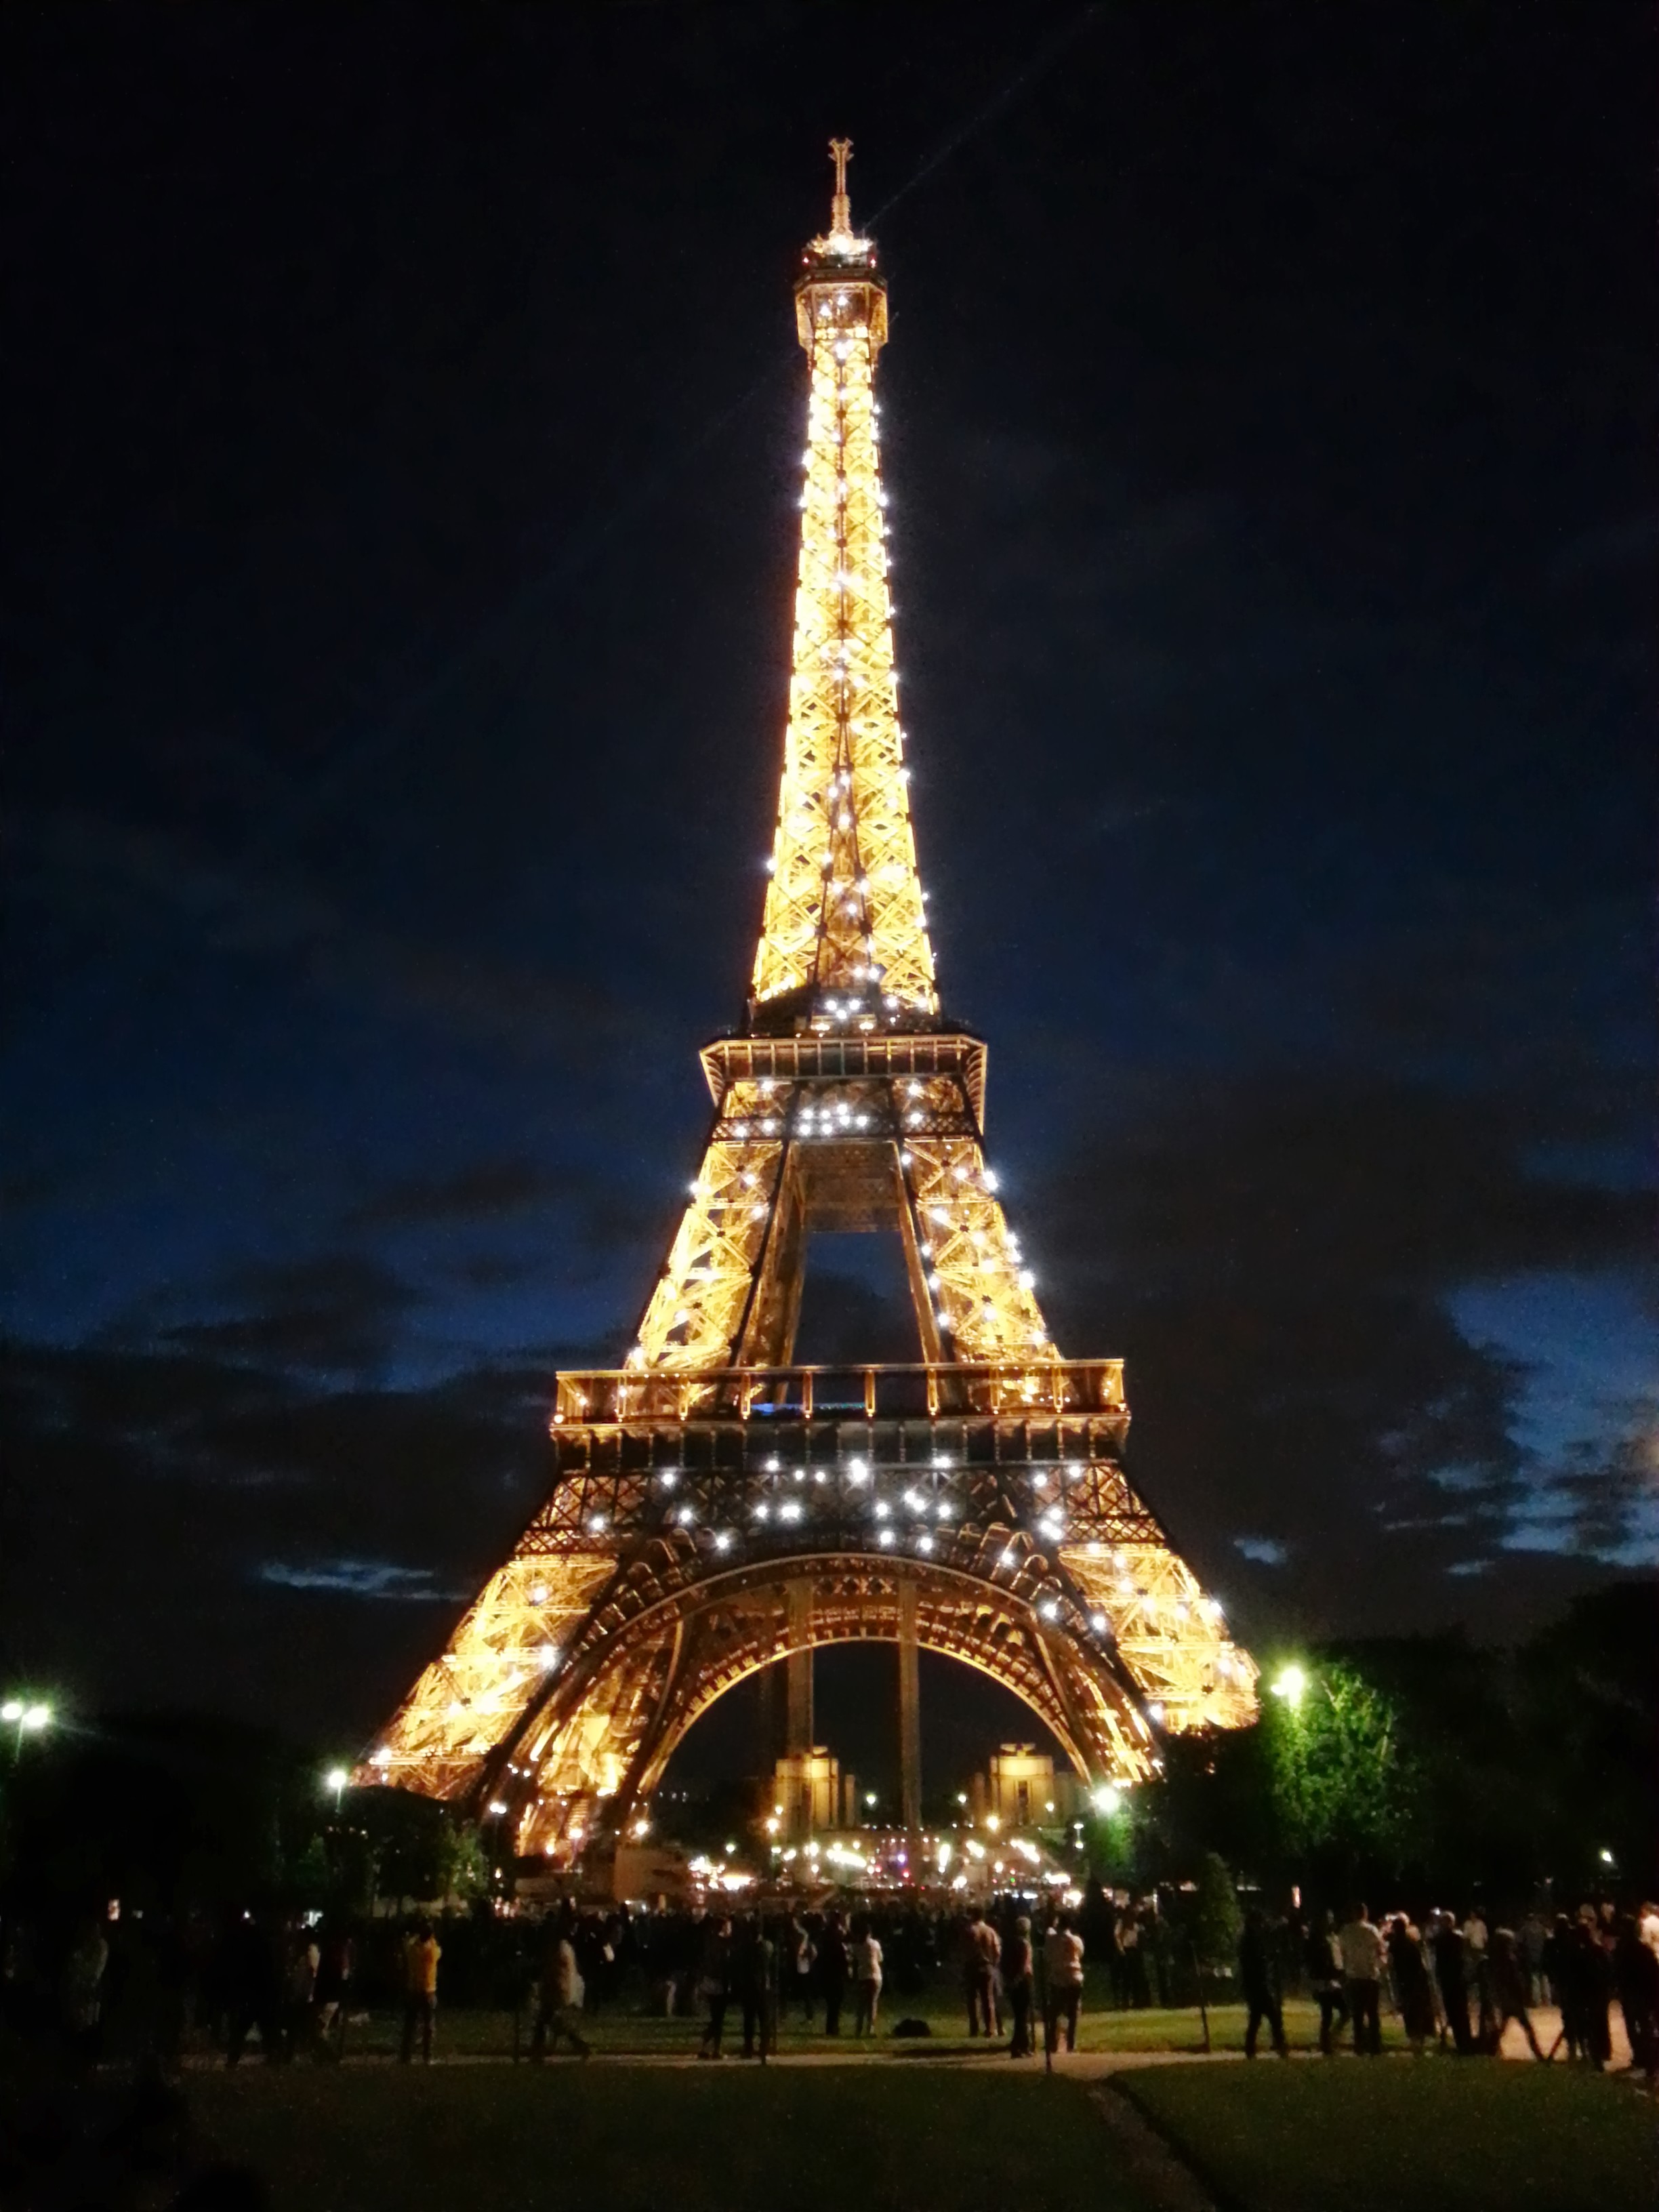 Eiffel Tower wallpapers at Night | PixelsTalk.Net